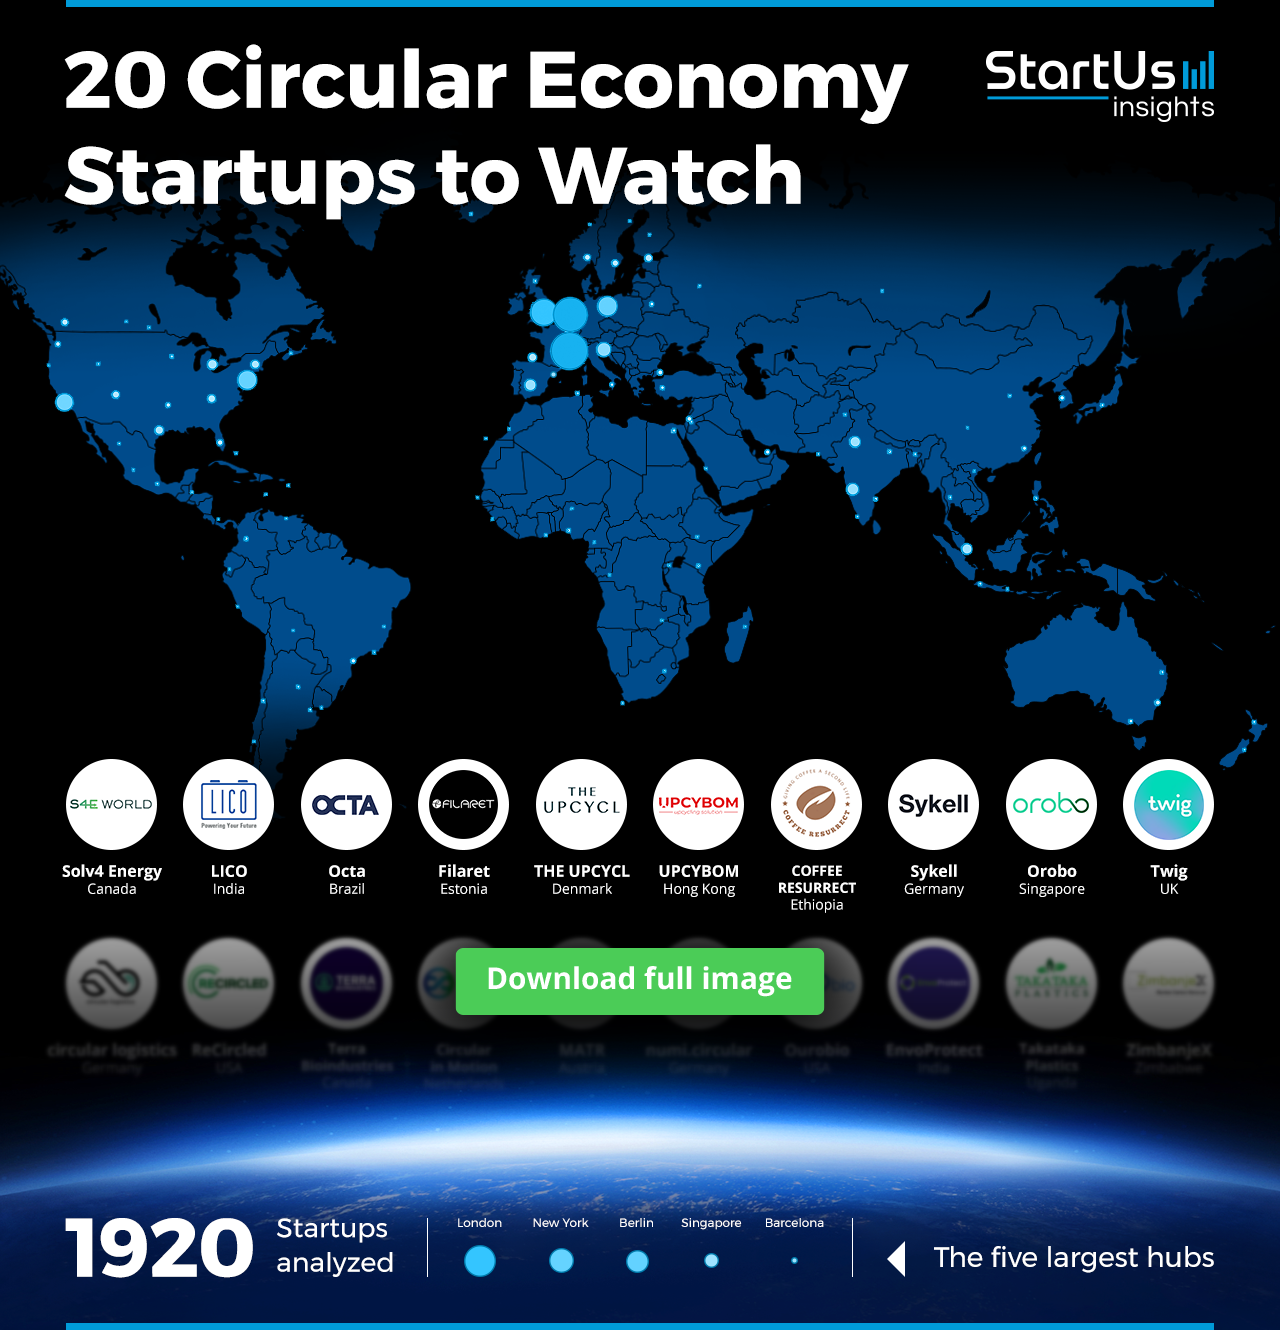 Circular-Economy-Startups-to-Watch-Heat-Map-Blurred-StartUs-Insights-noresize